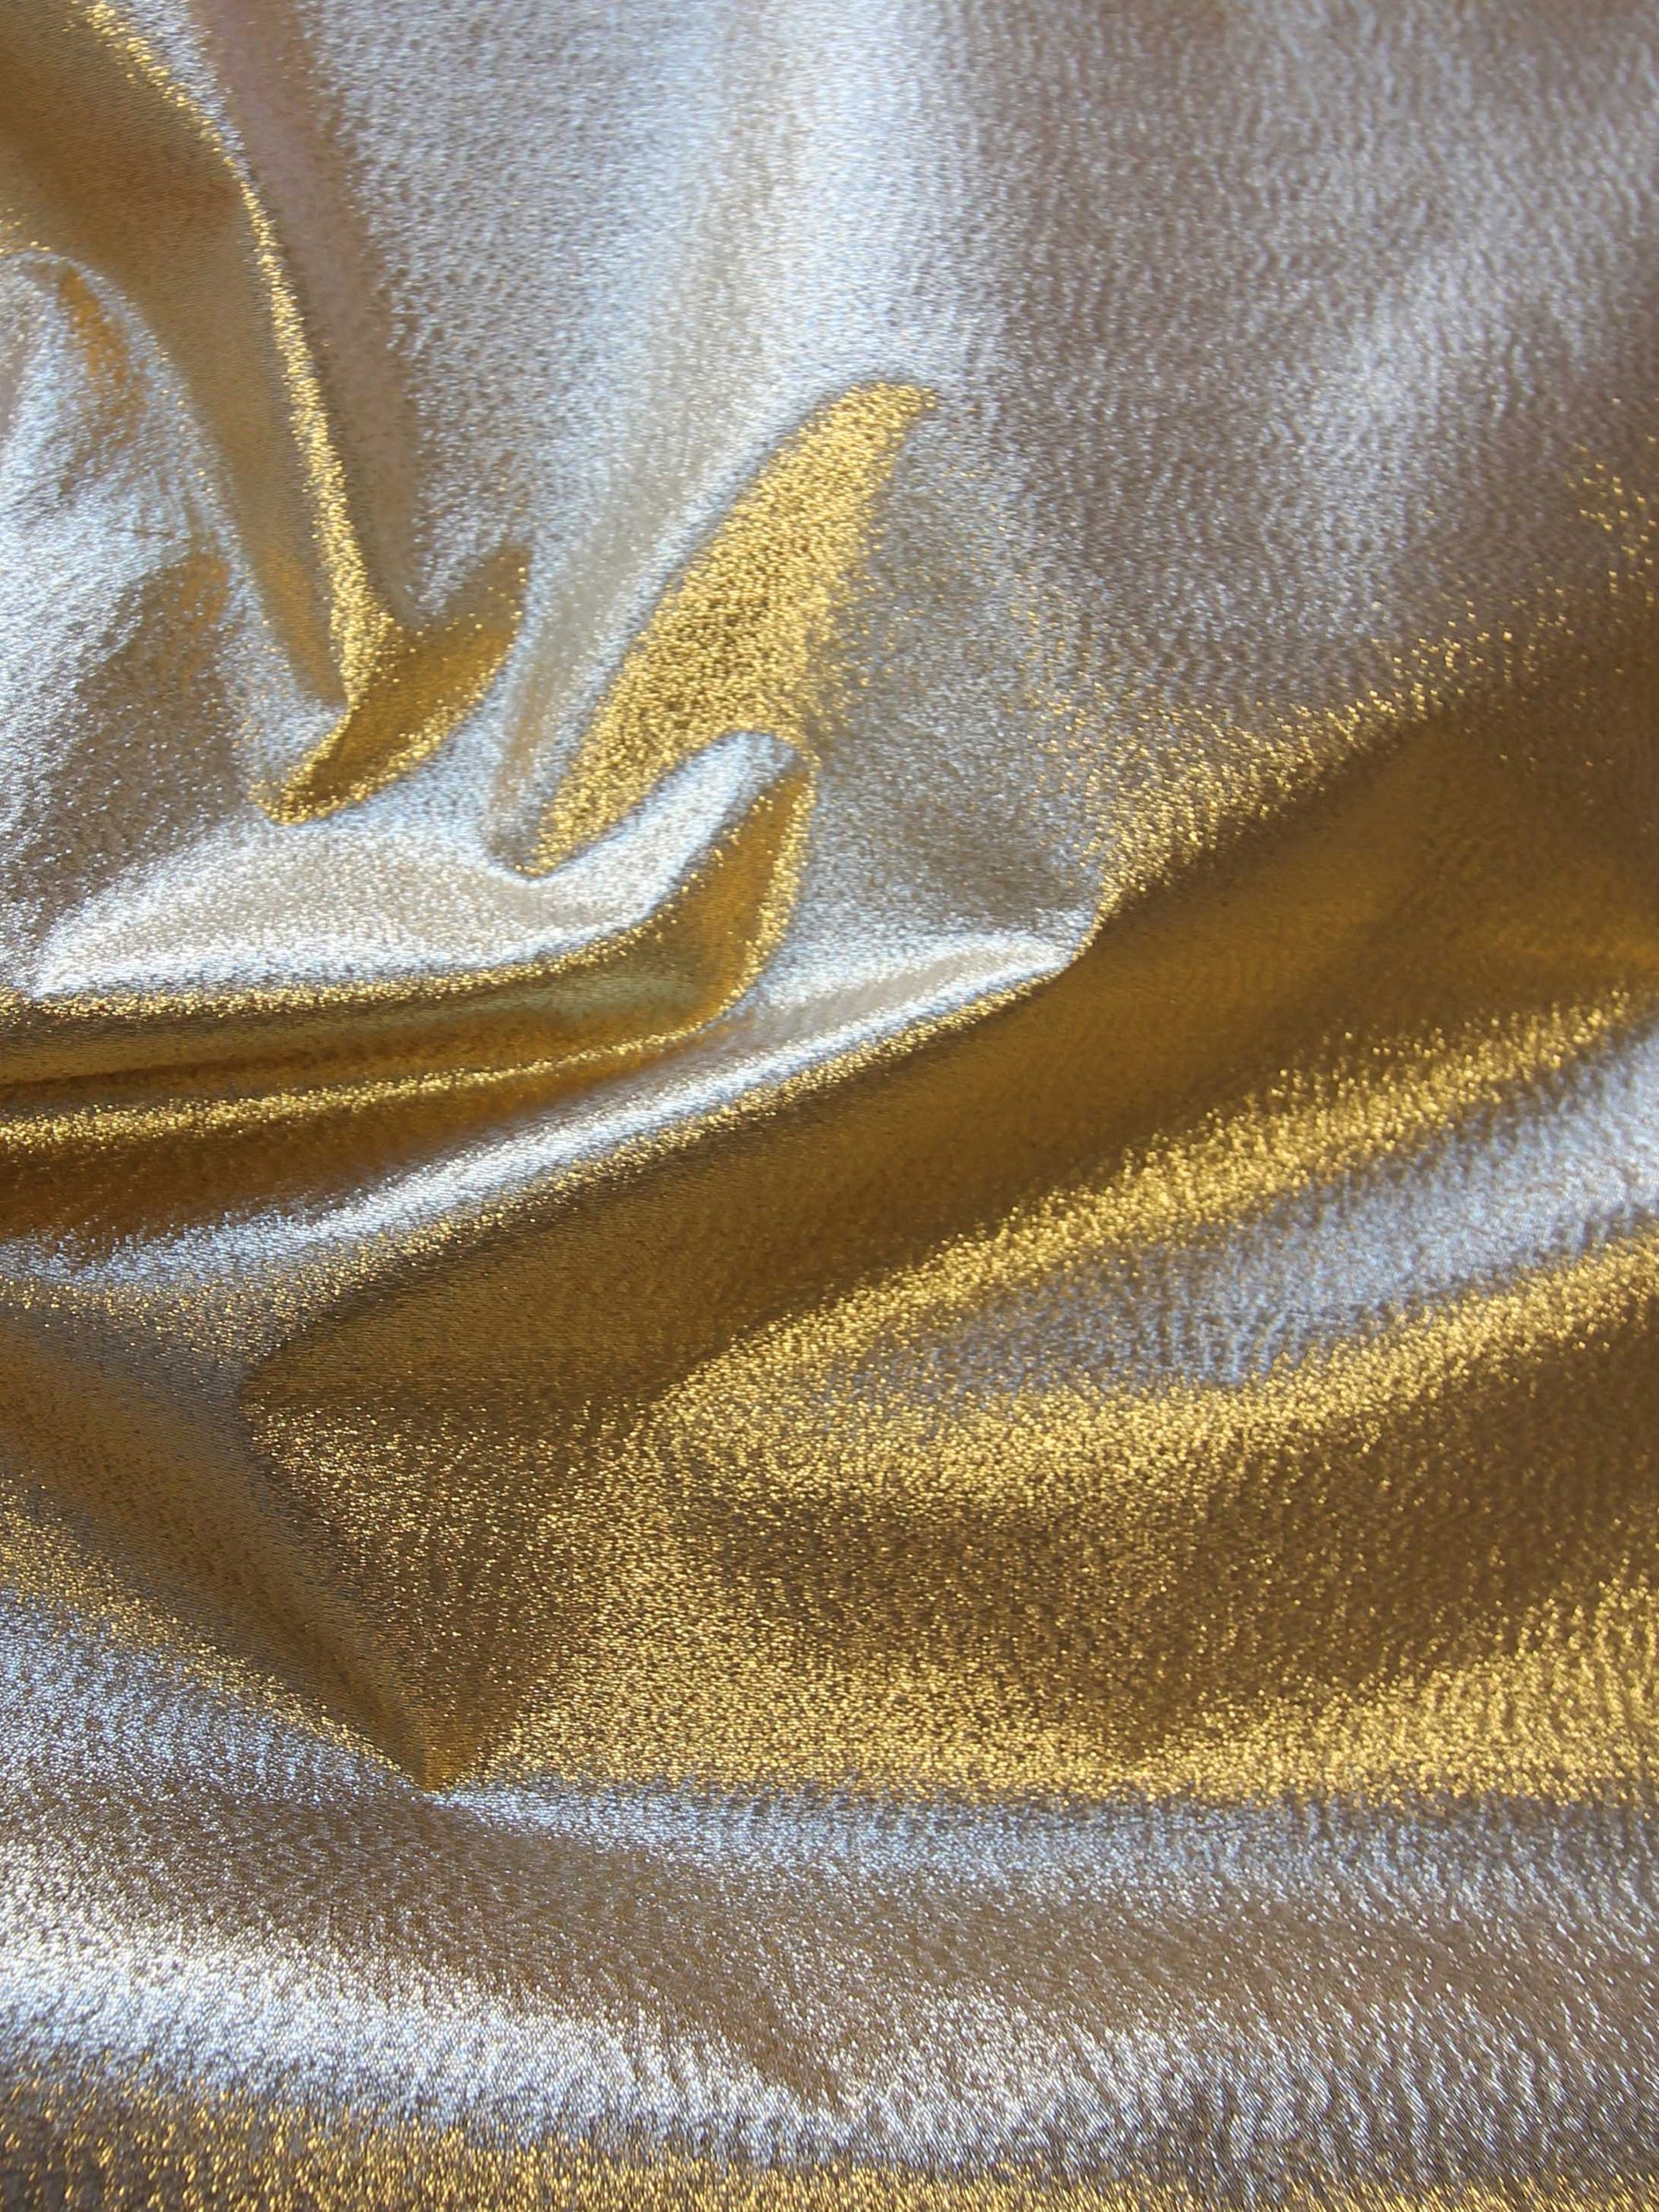 Made in England Metallic Tulle - Gold  FABRICS & FABRICS – Fabrics &  Fabrics